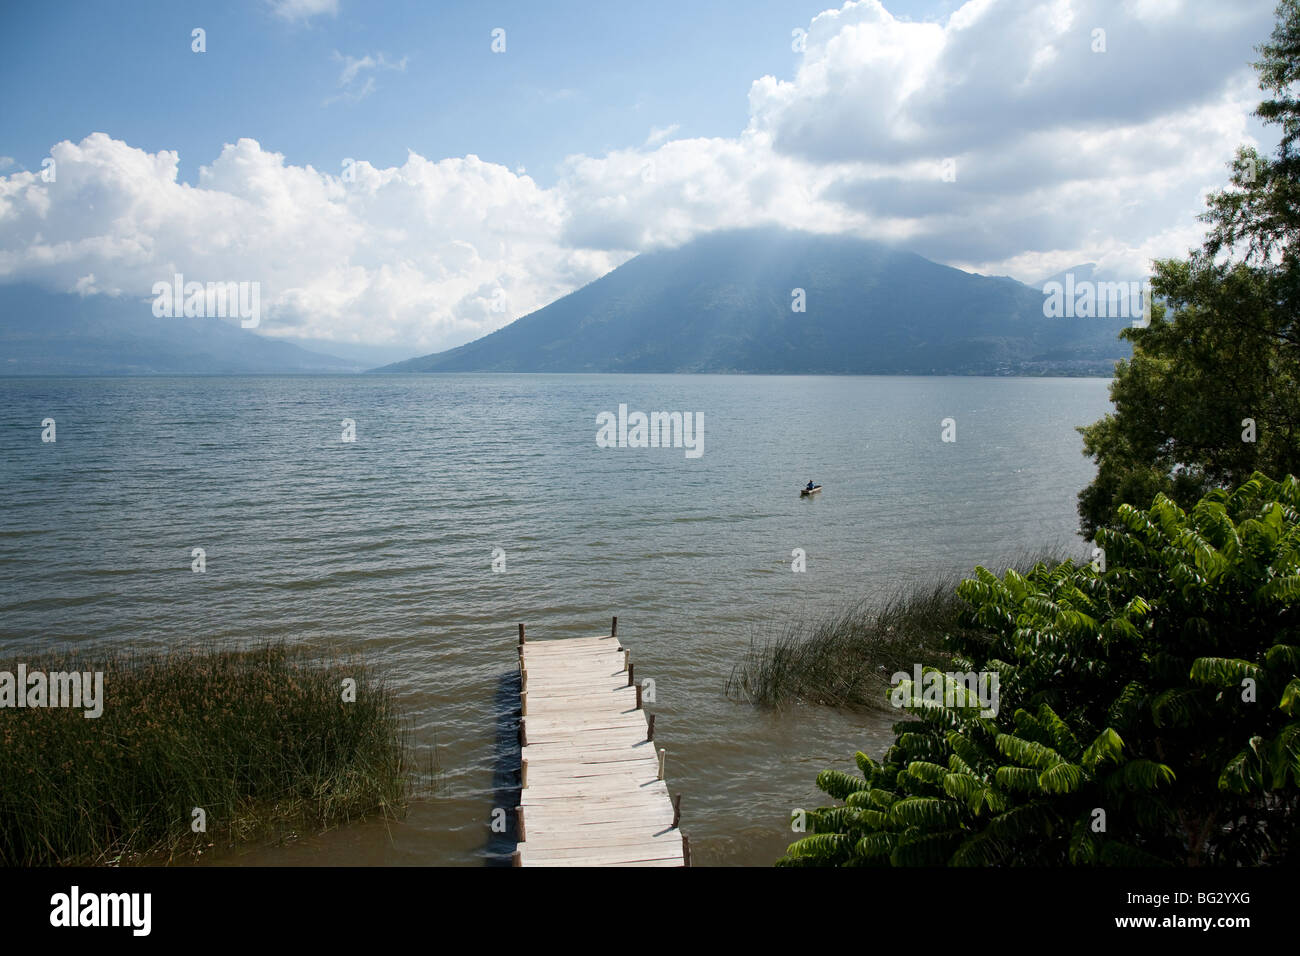 Volcano San Pedro at Lake Atitlan Guatemala. Stock Photo